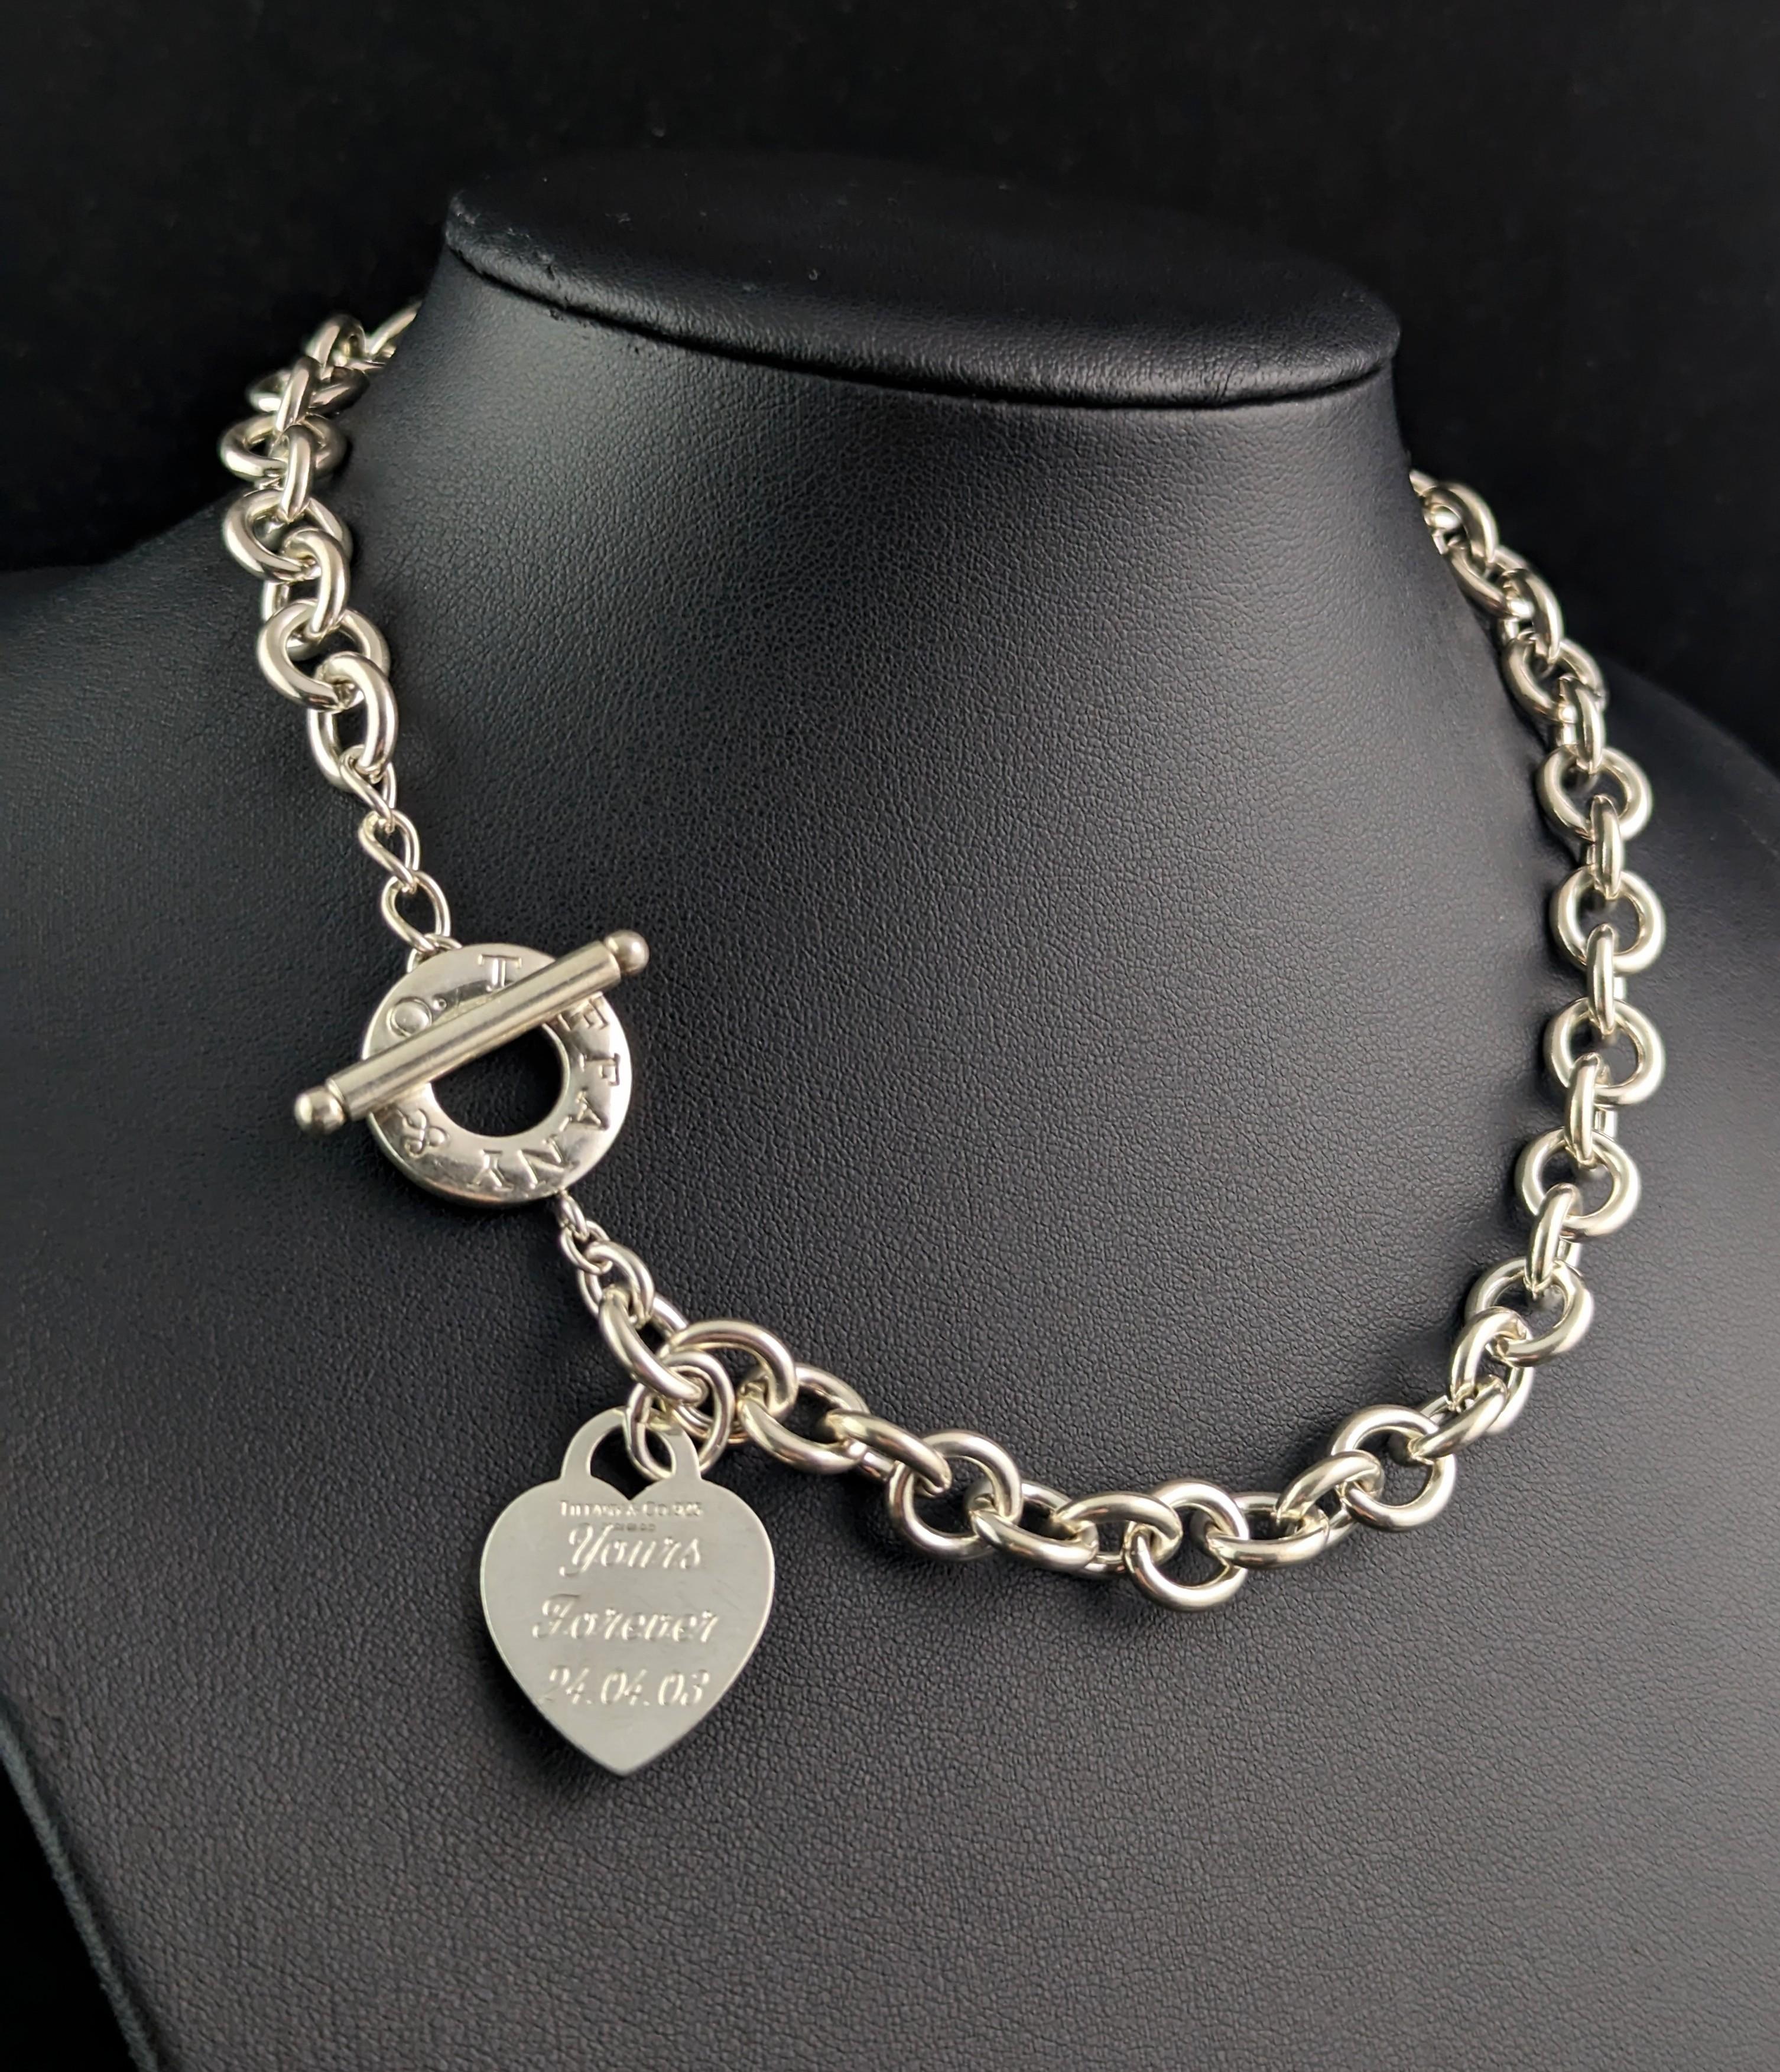 tiffany toggle necklace used